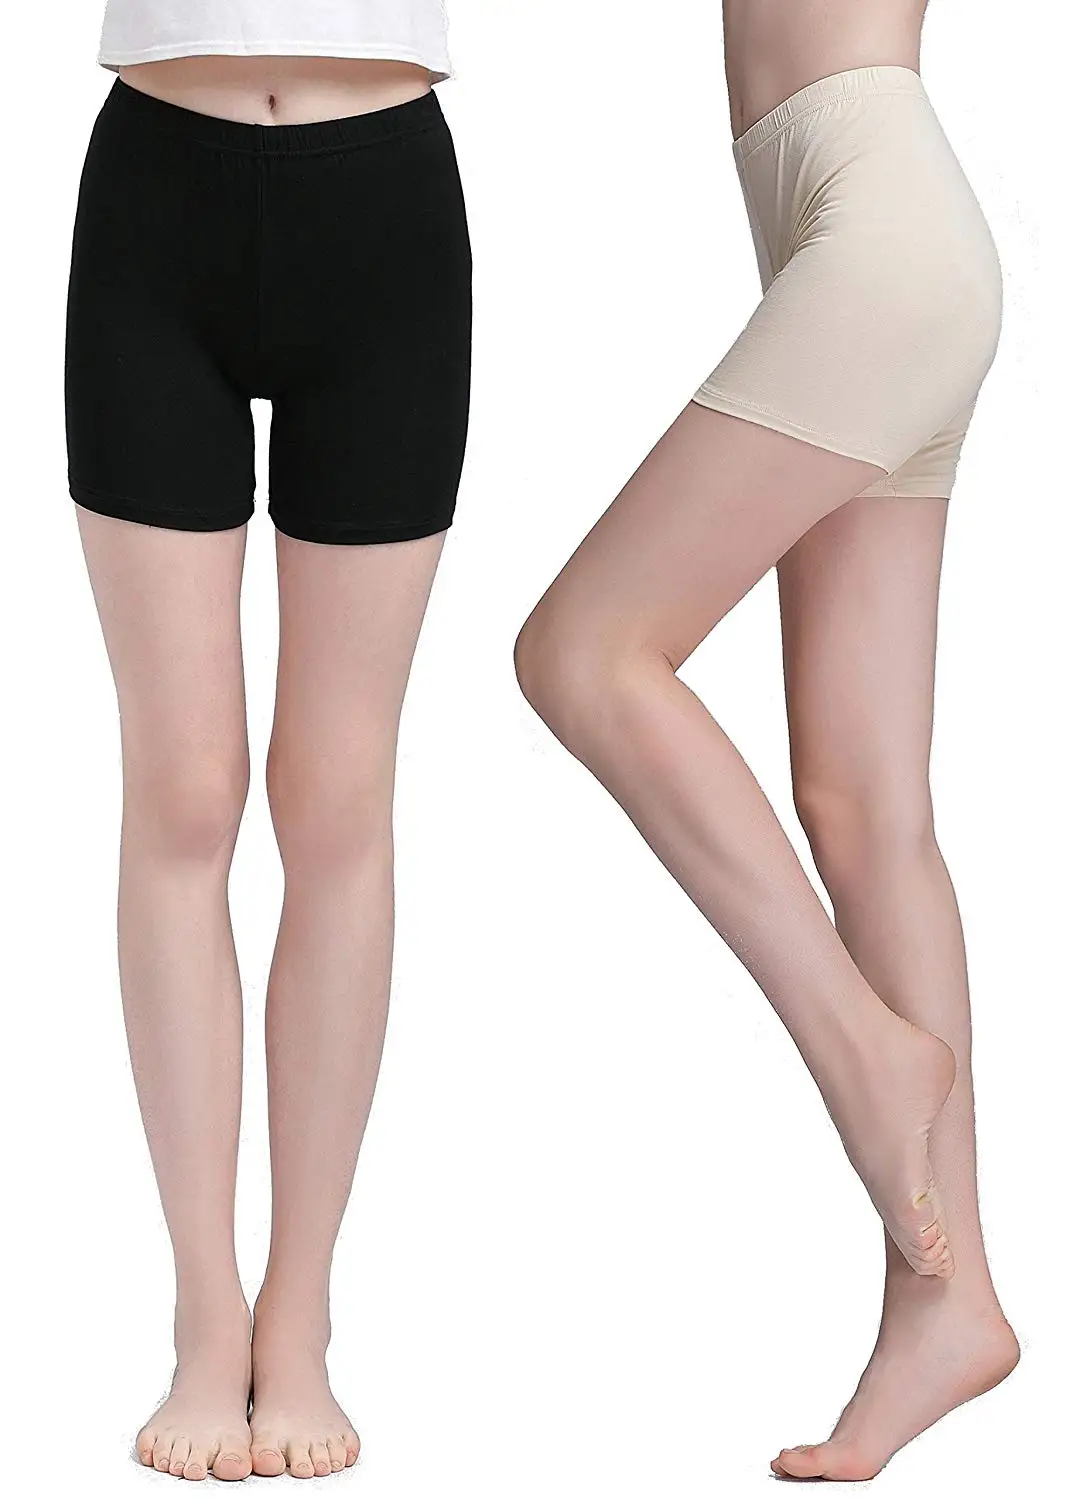 Buy Vinconie Short Leggings for Women Anti Chafing Shorts Under